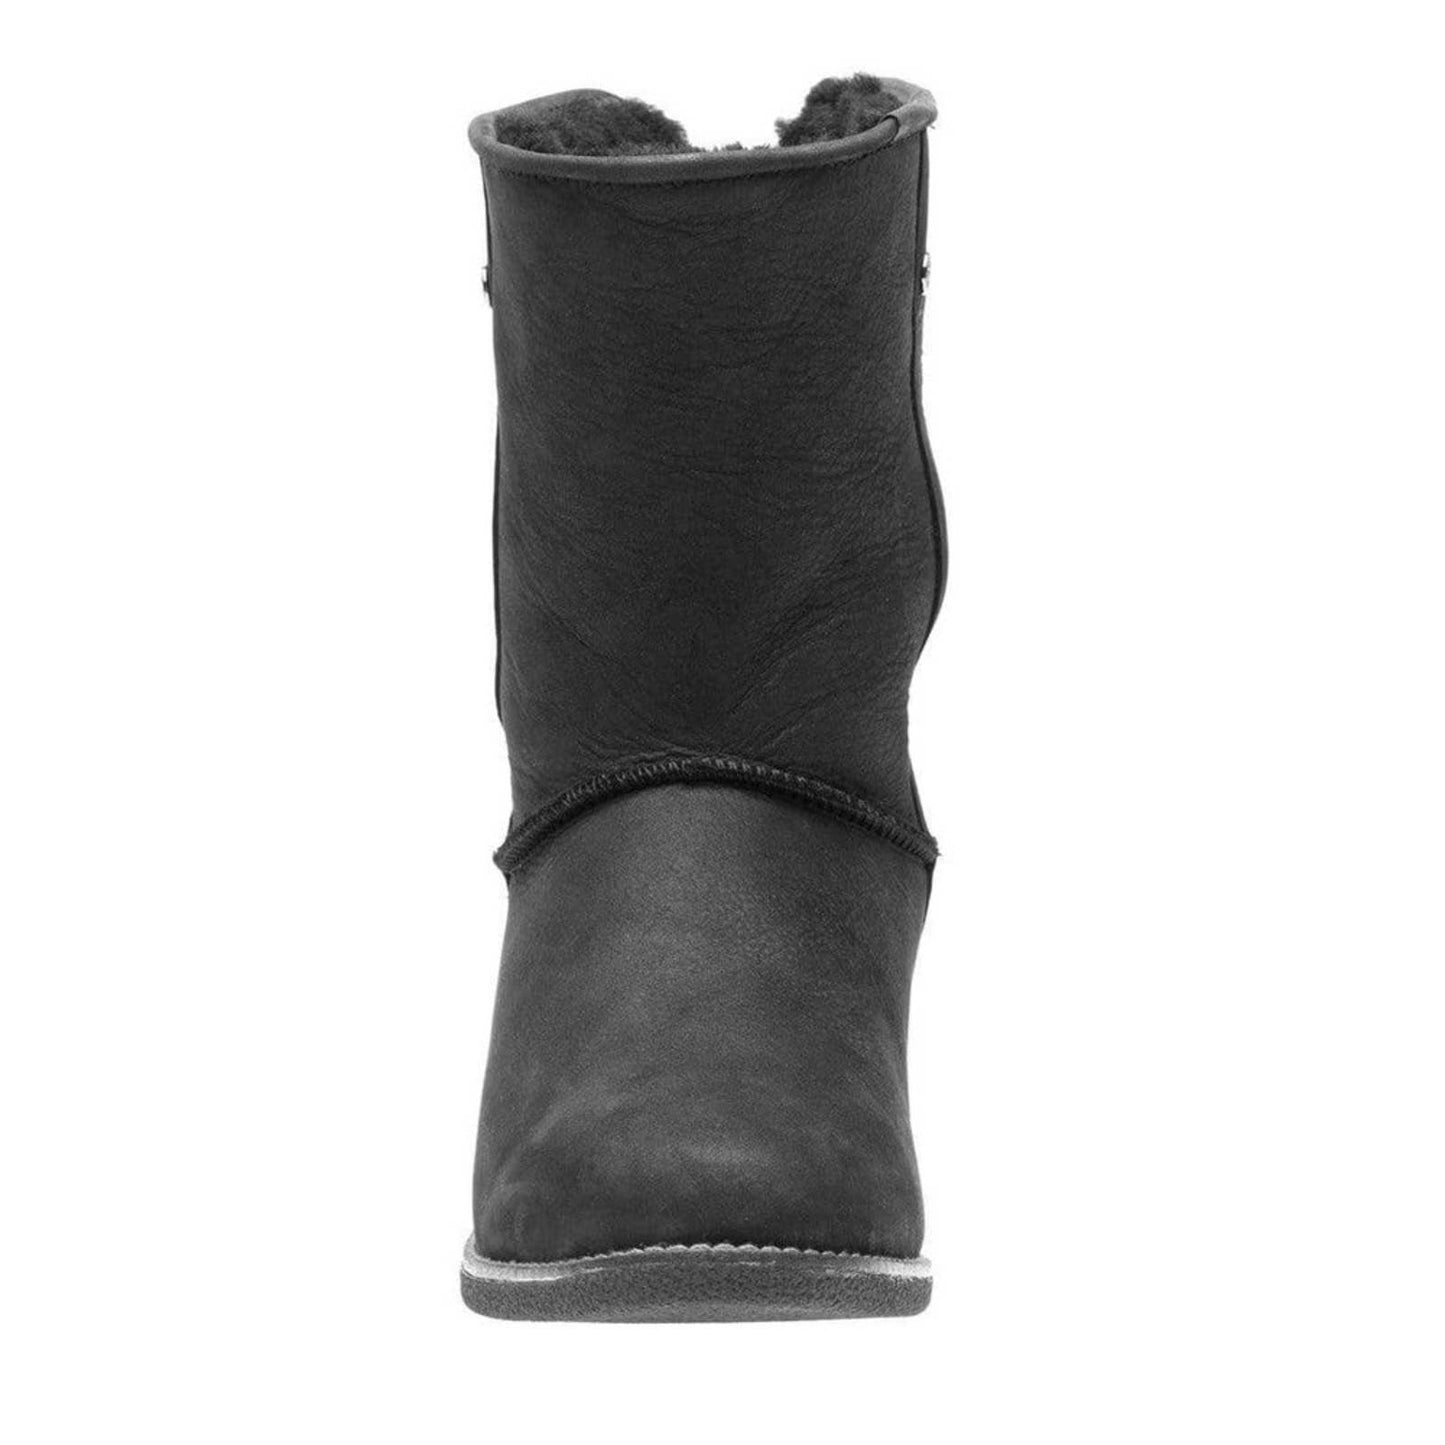 NWT abeo Pro Burlington Boots Black Oiled Winter Boots